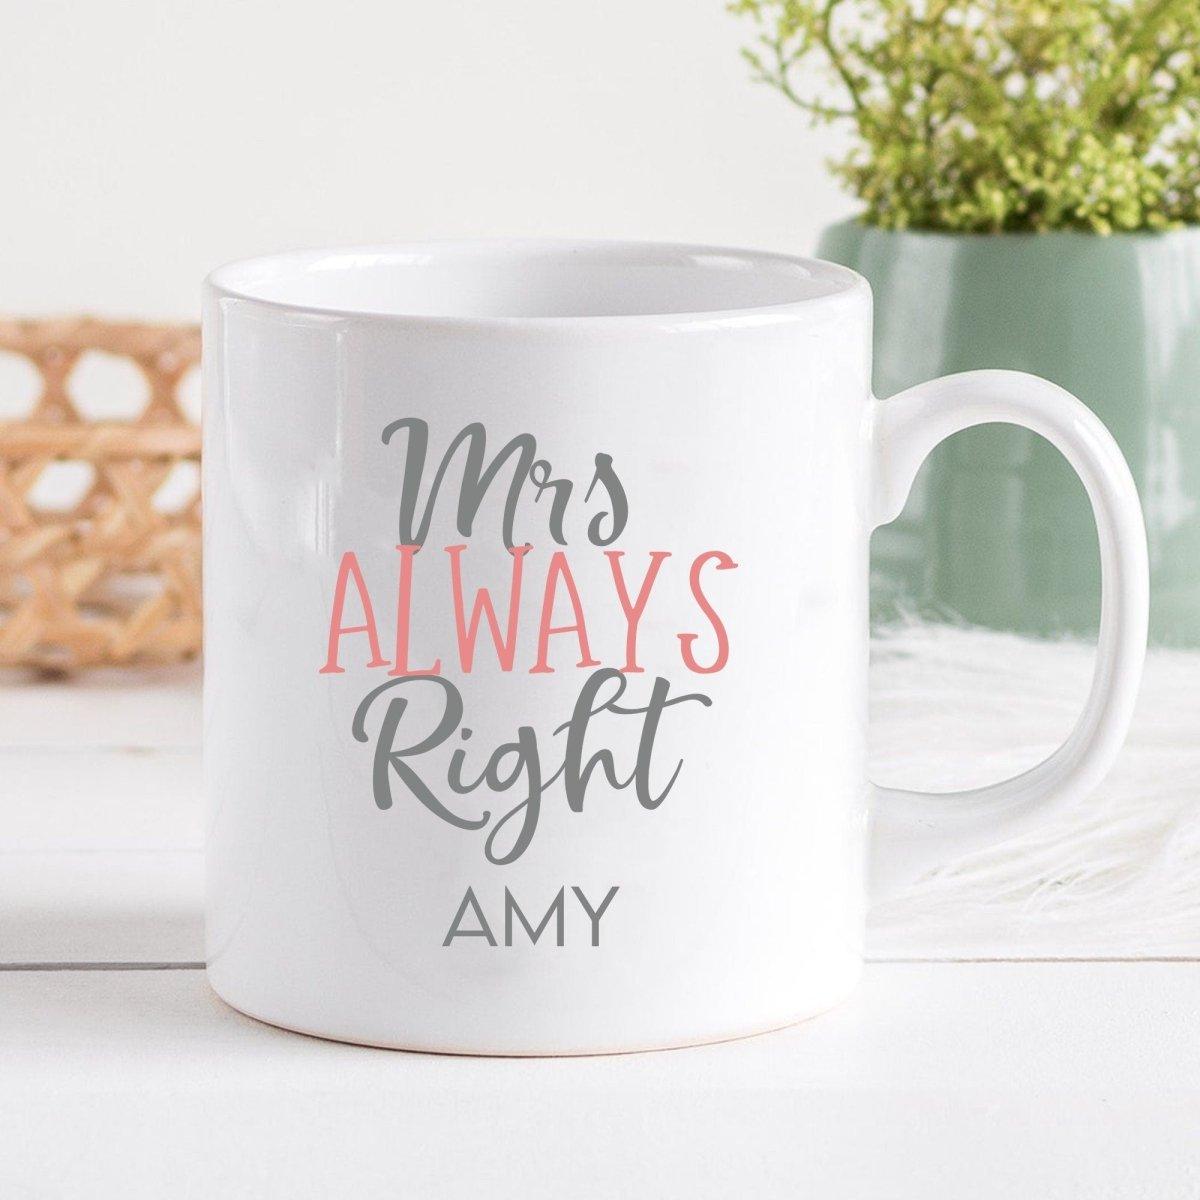 Personalised Couple Mug Set, Valentines Mug Set, Valentine's Gift Set, Matching Mr and Mrs Mugs, Anniversary Gift, Humor Gift, Newlywed Mugs - Amy Lucy